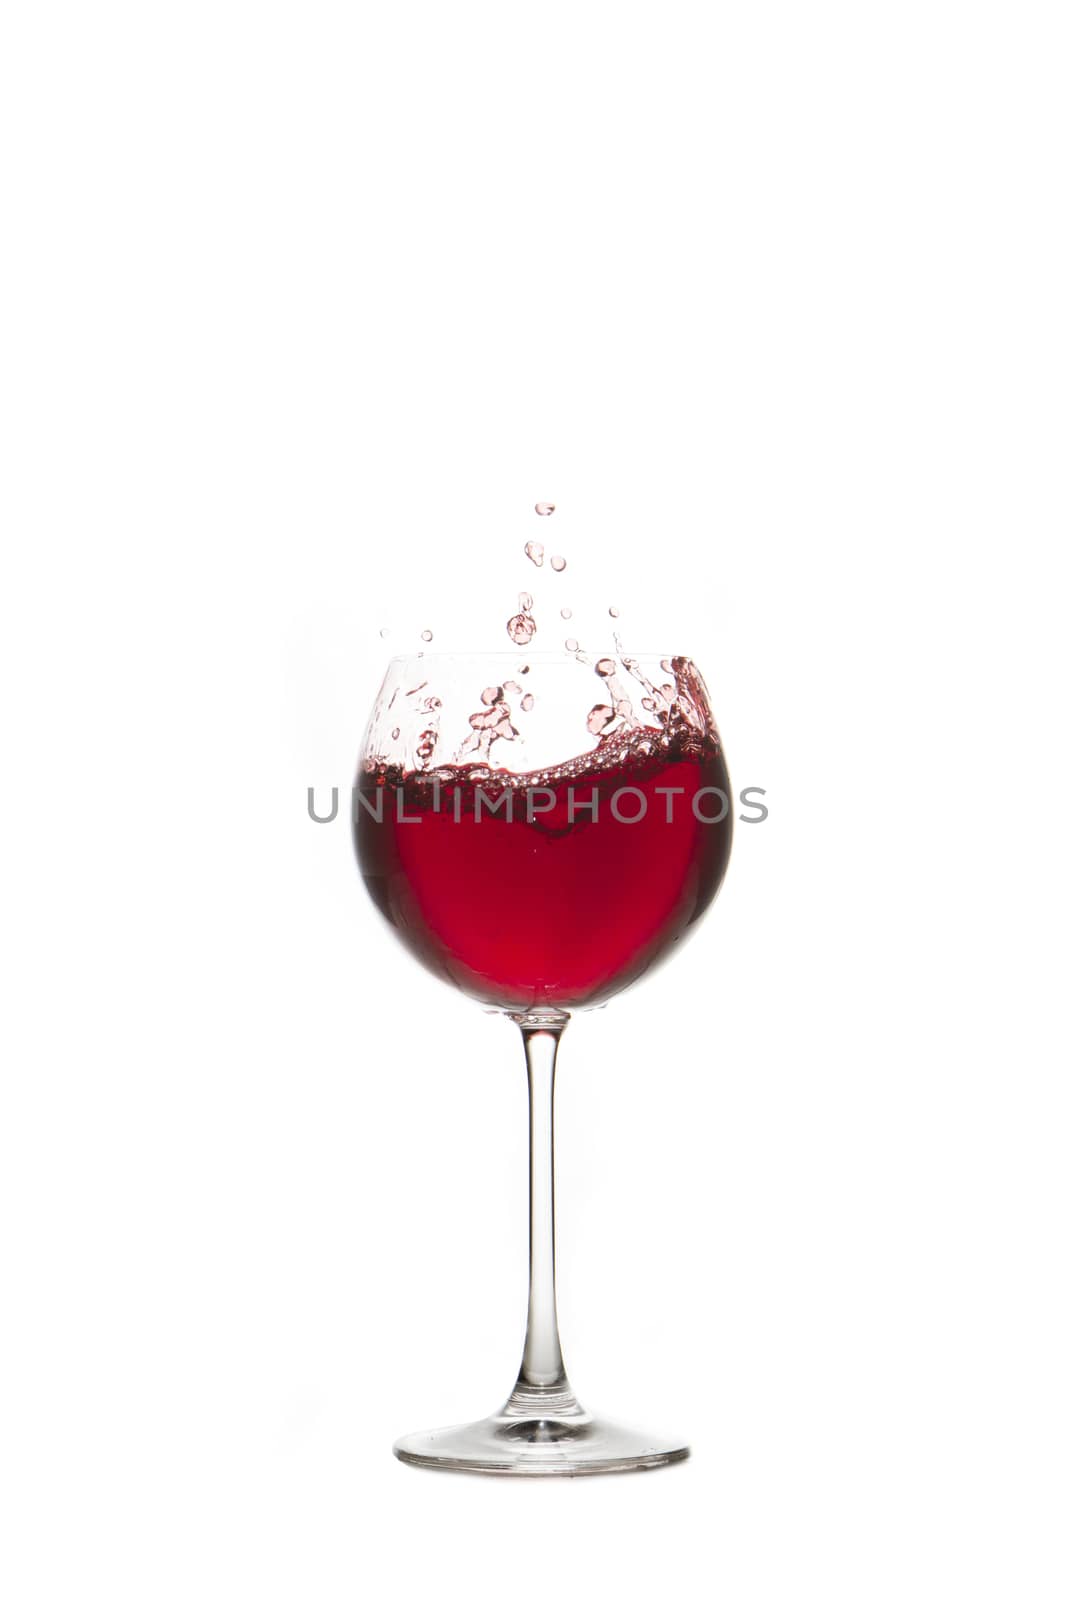 Red wine splash Glass with white background